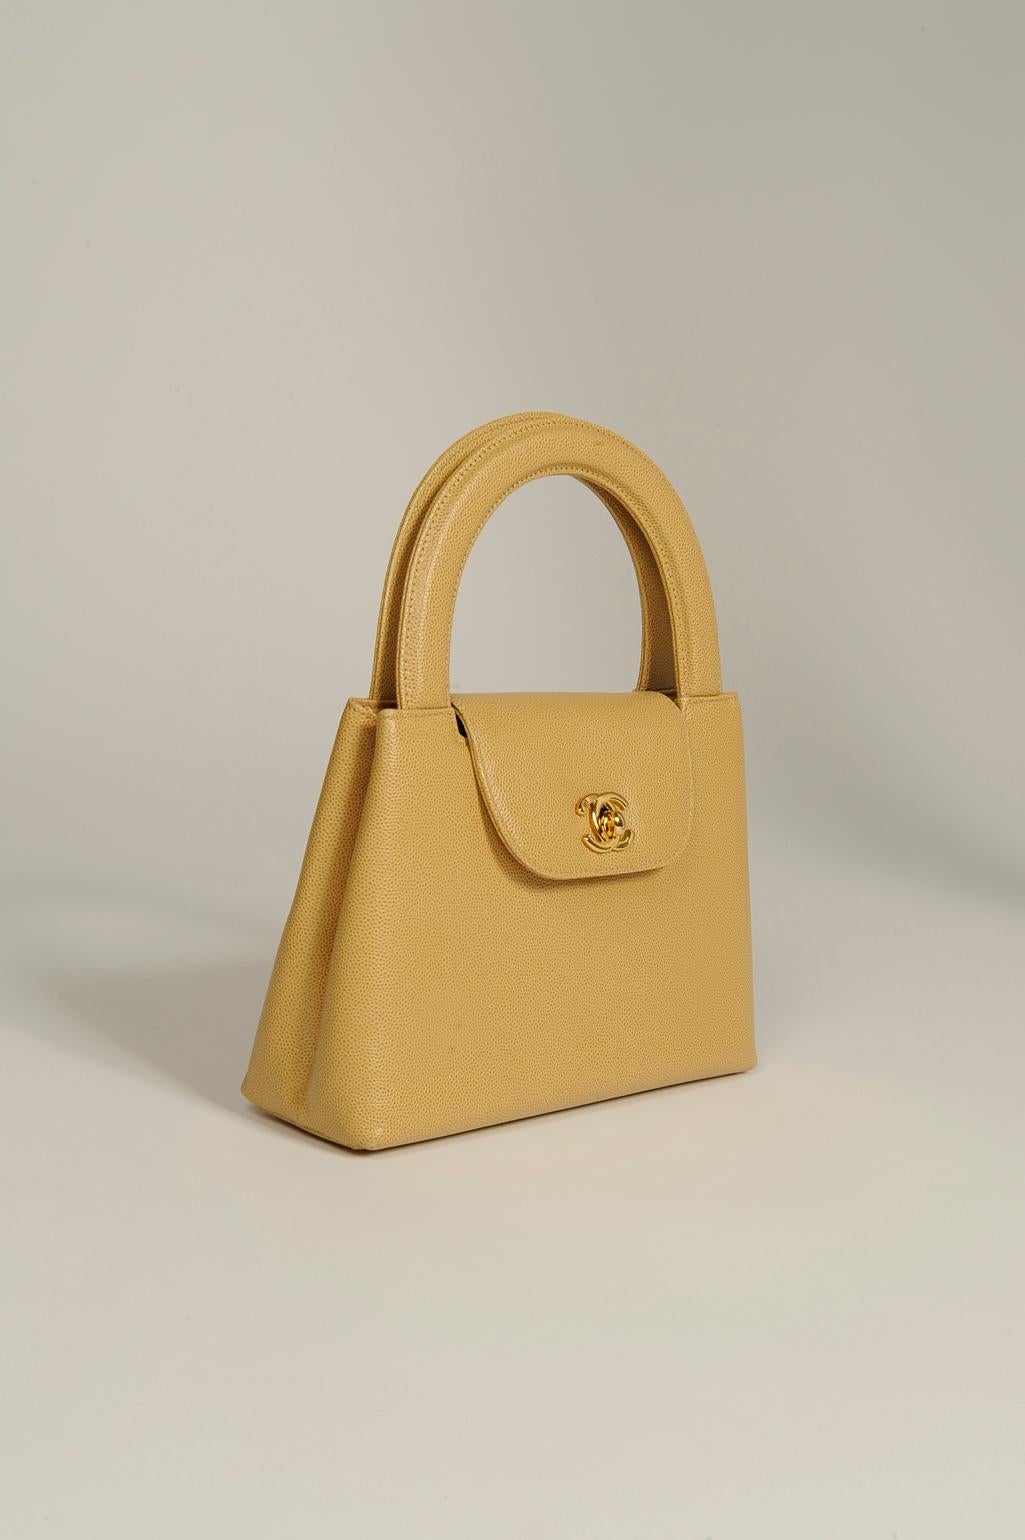 Women's or Men's Chanel Caviar Tote Handbag